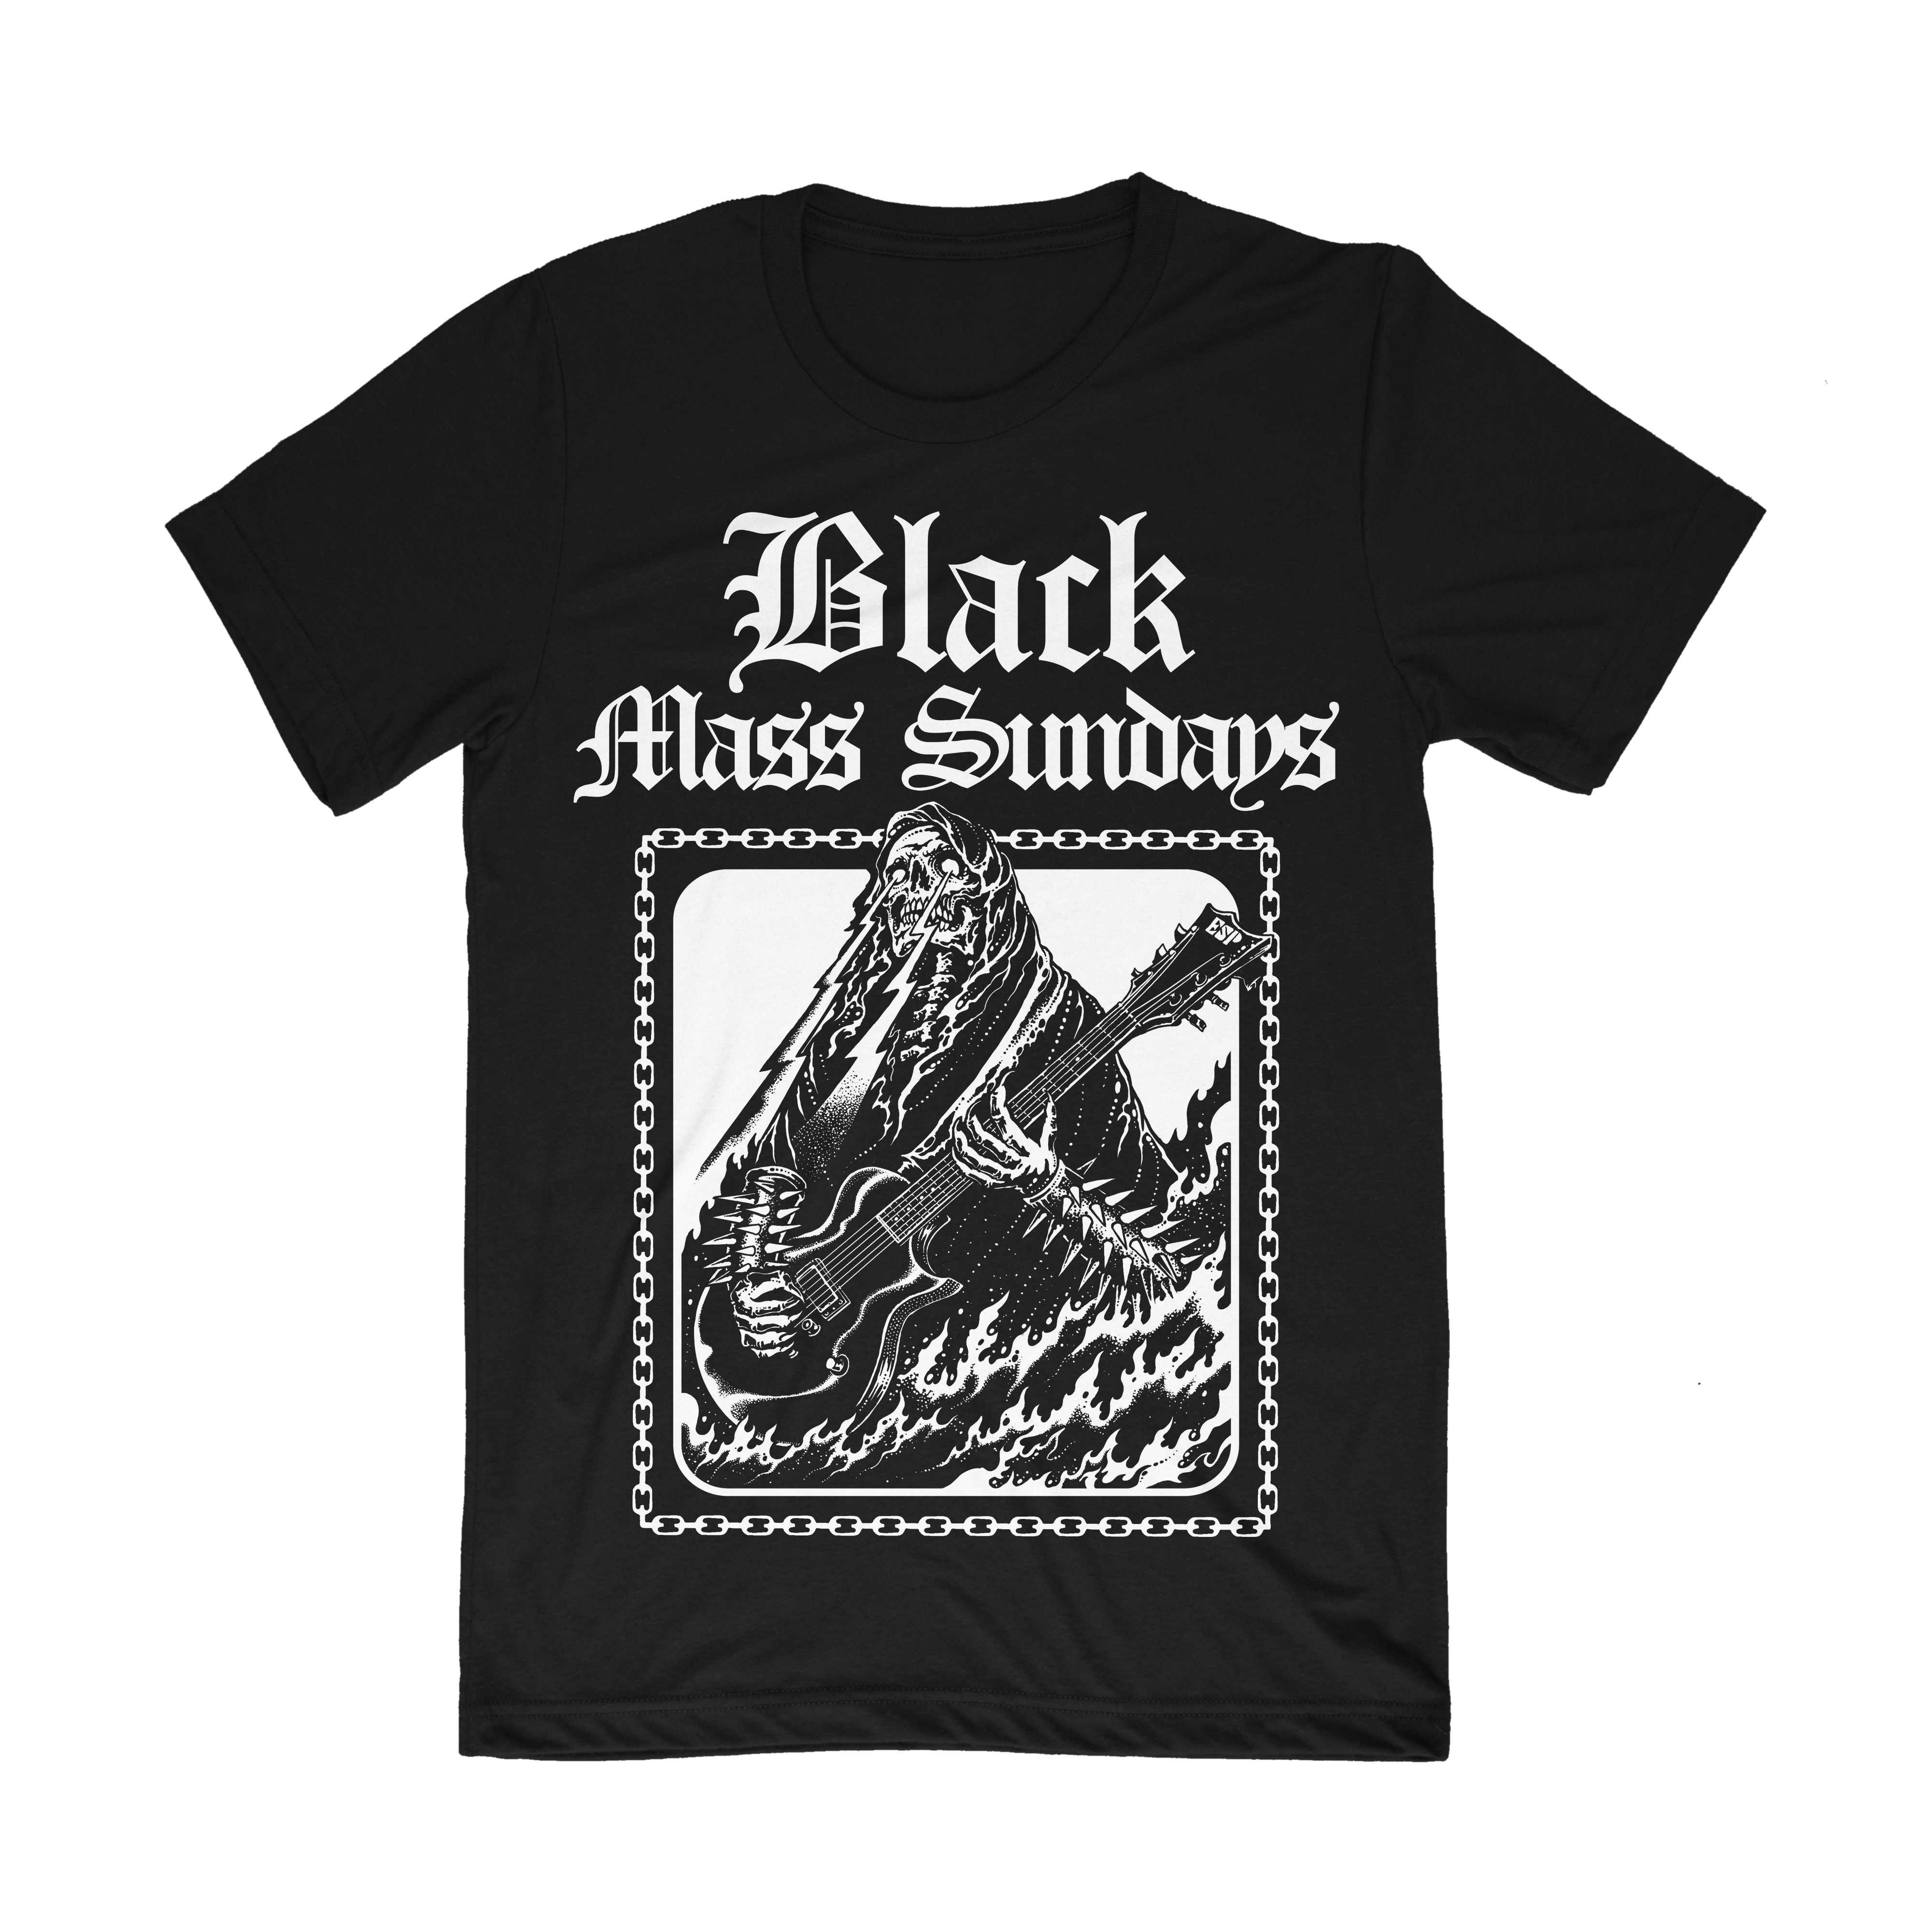 Black Mass Sunday's Shirt